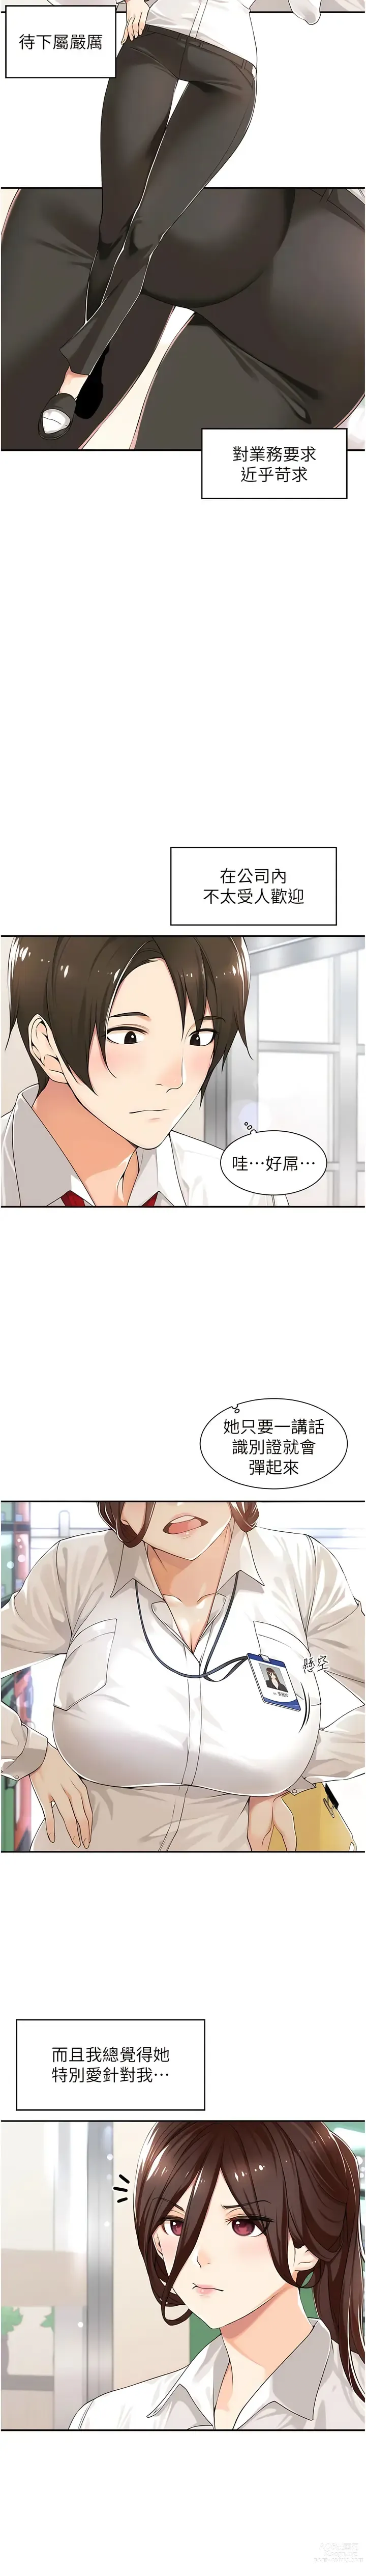 Page 4 of manga 工做狂女上司 1-10話